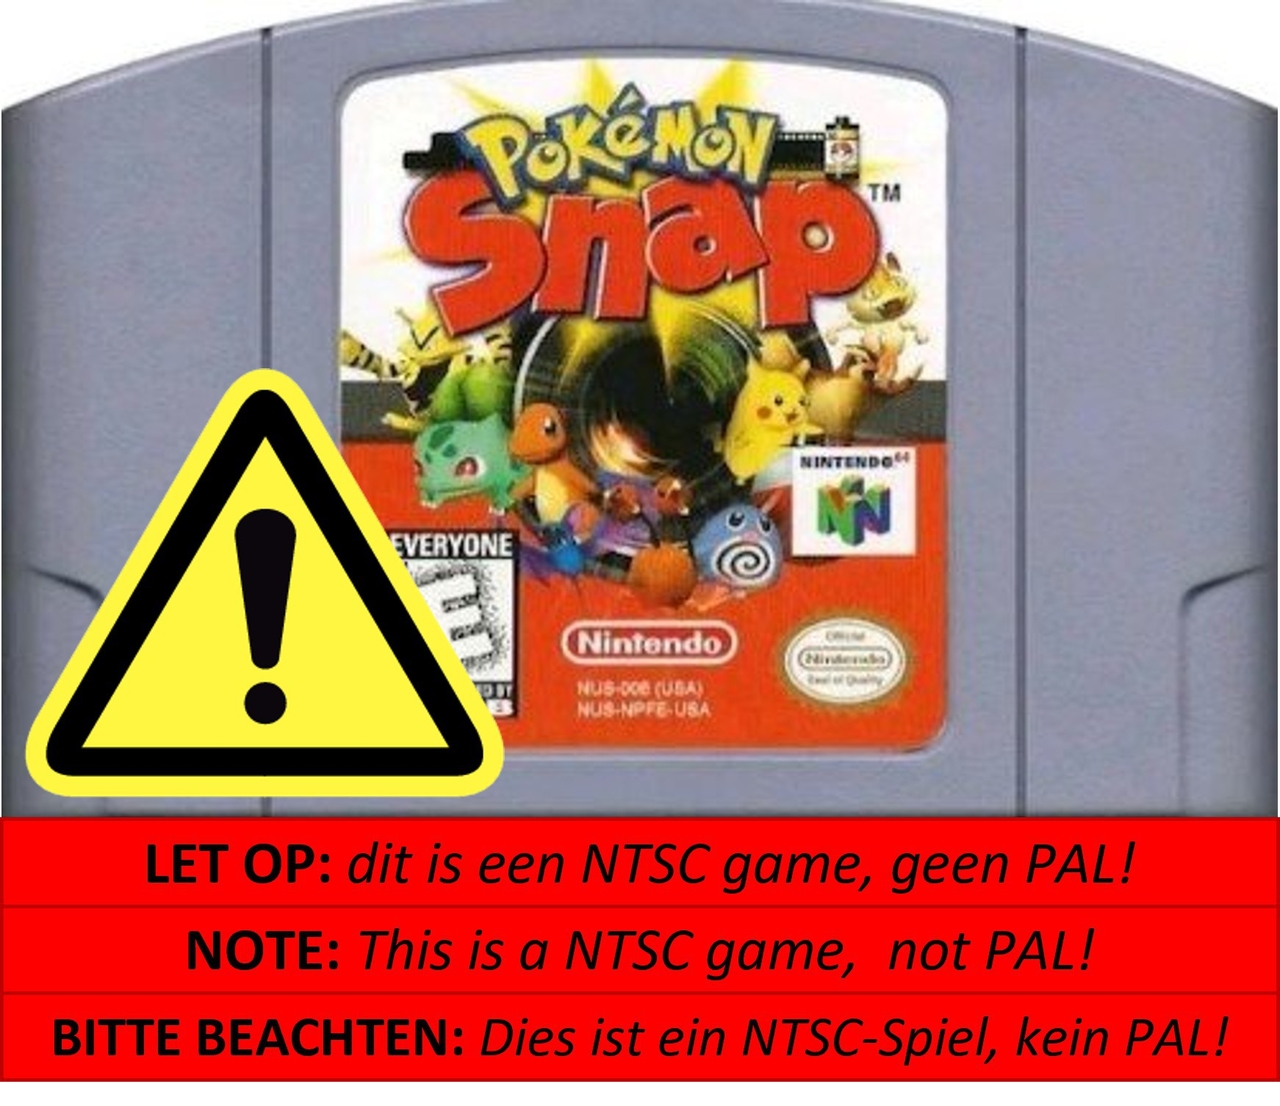 Pokemon Snap [NTSC] - Nintendo 64 Games